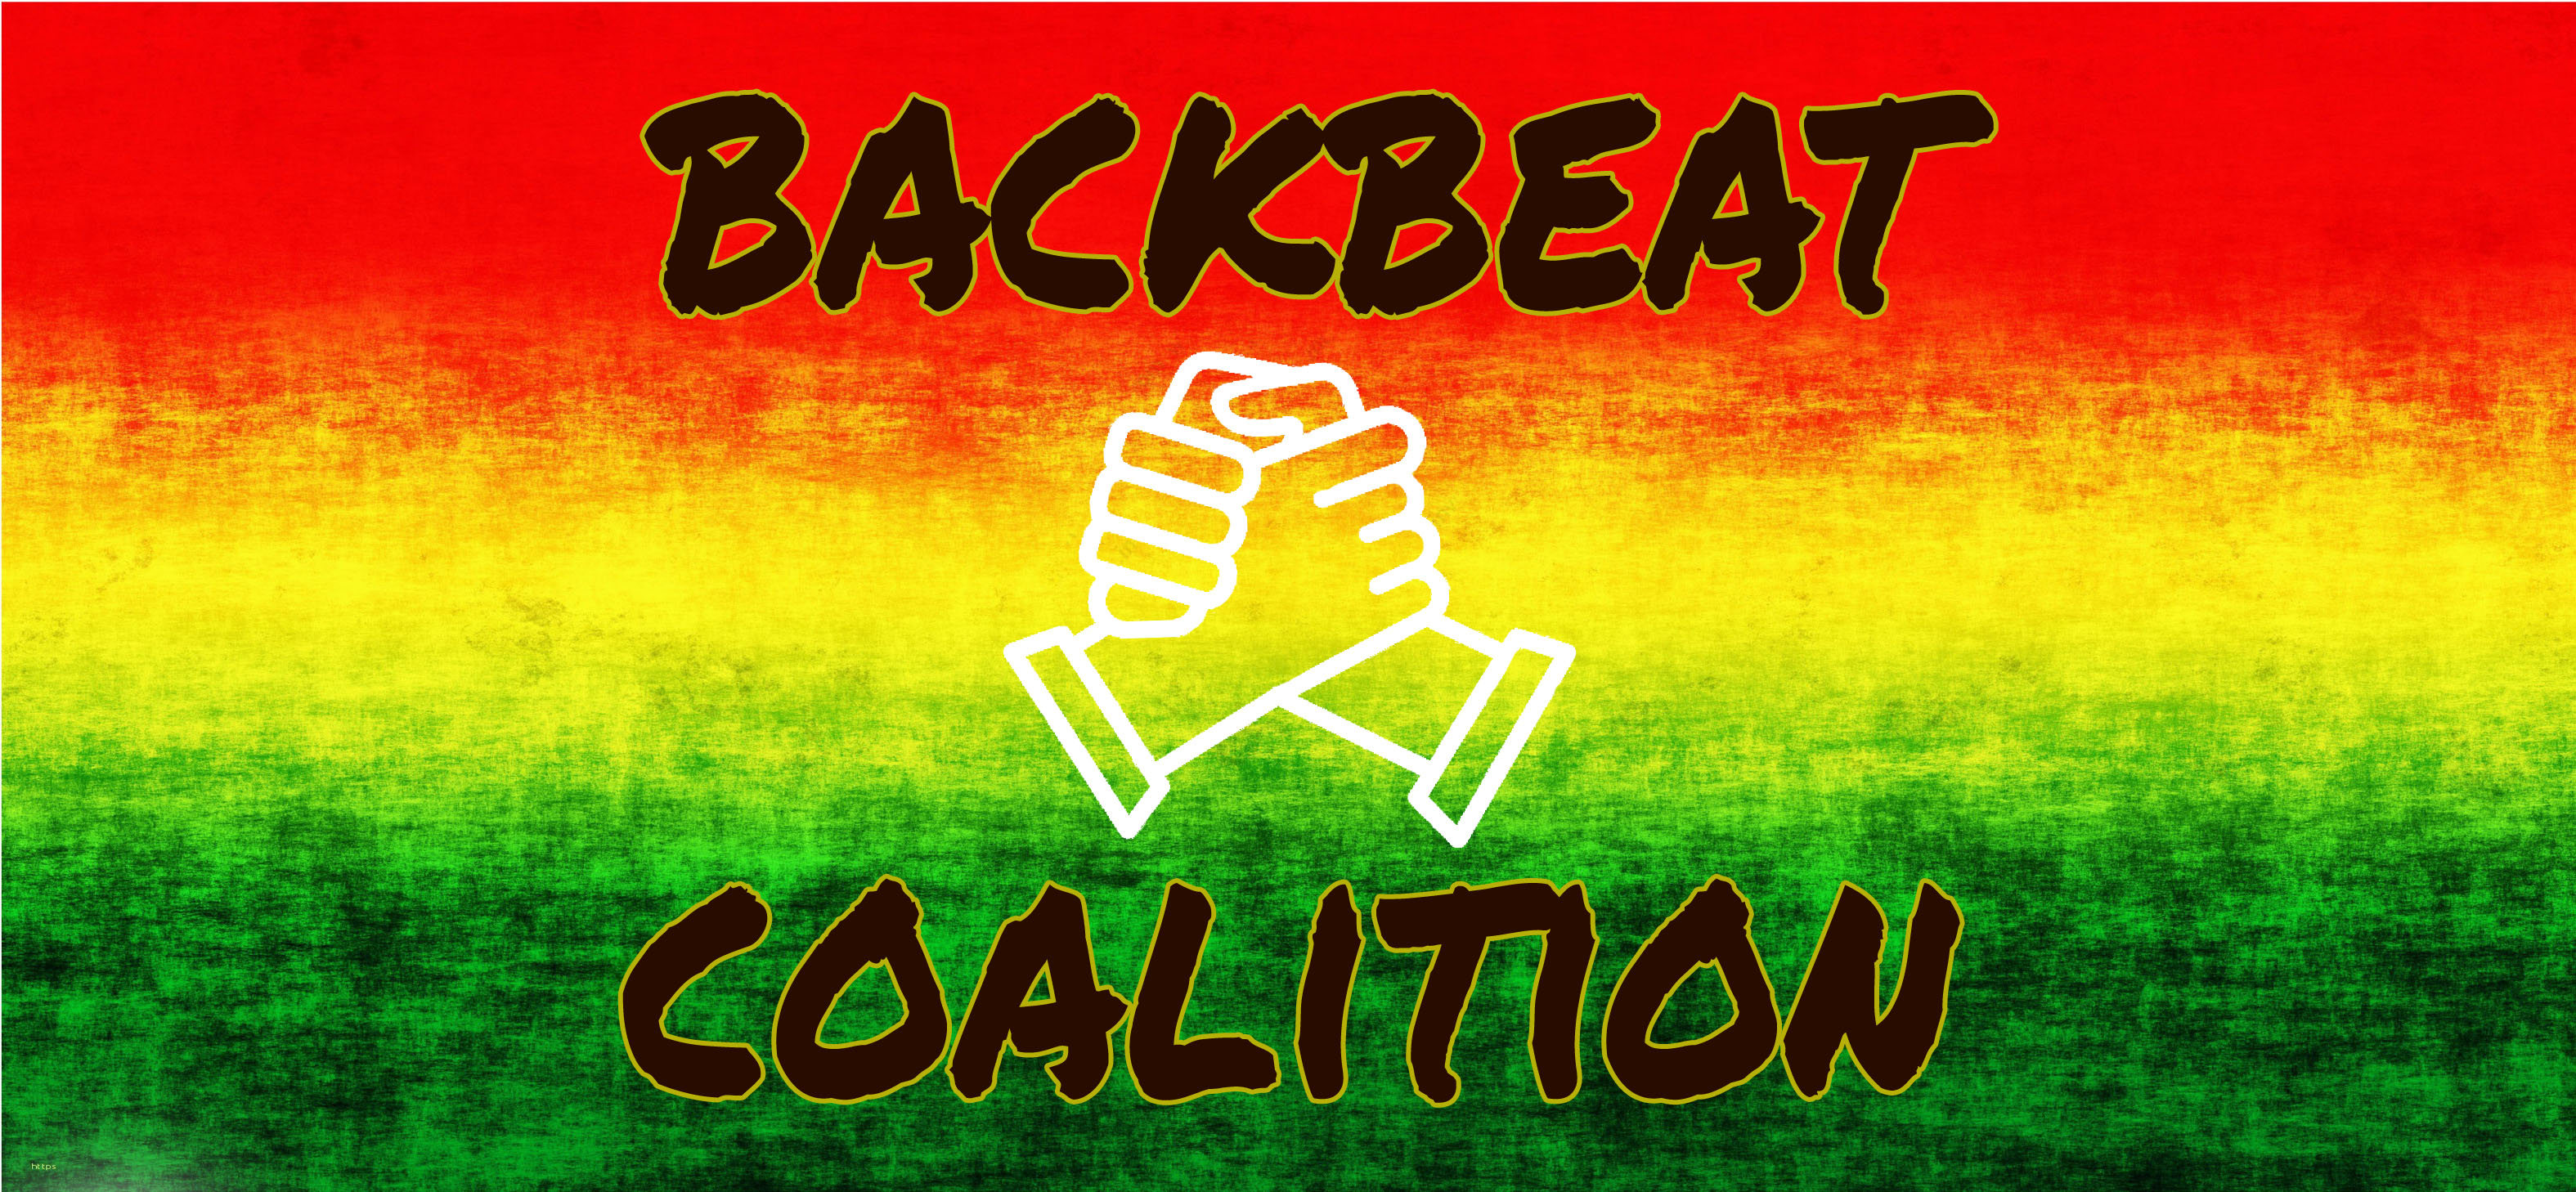 backbeat coalition